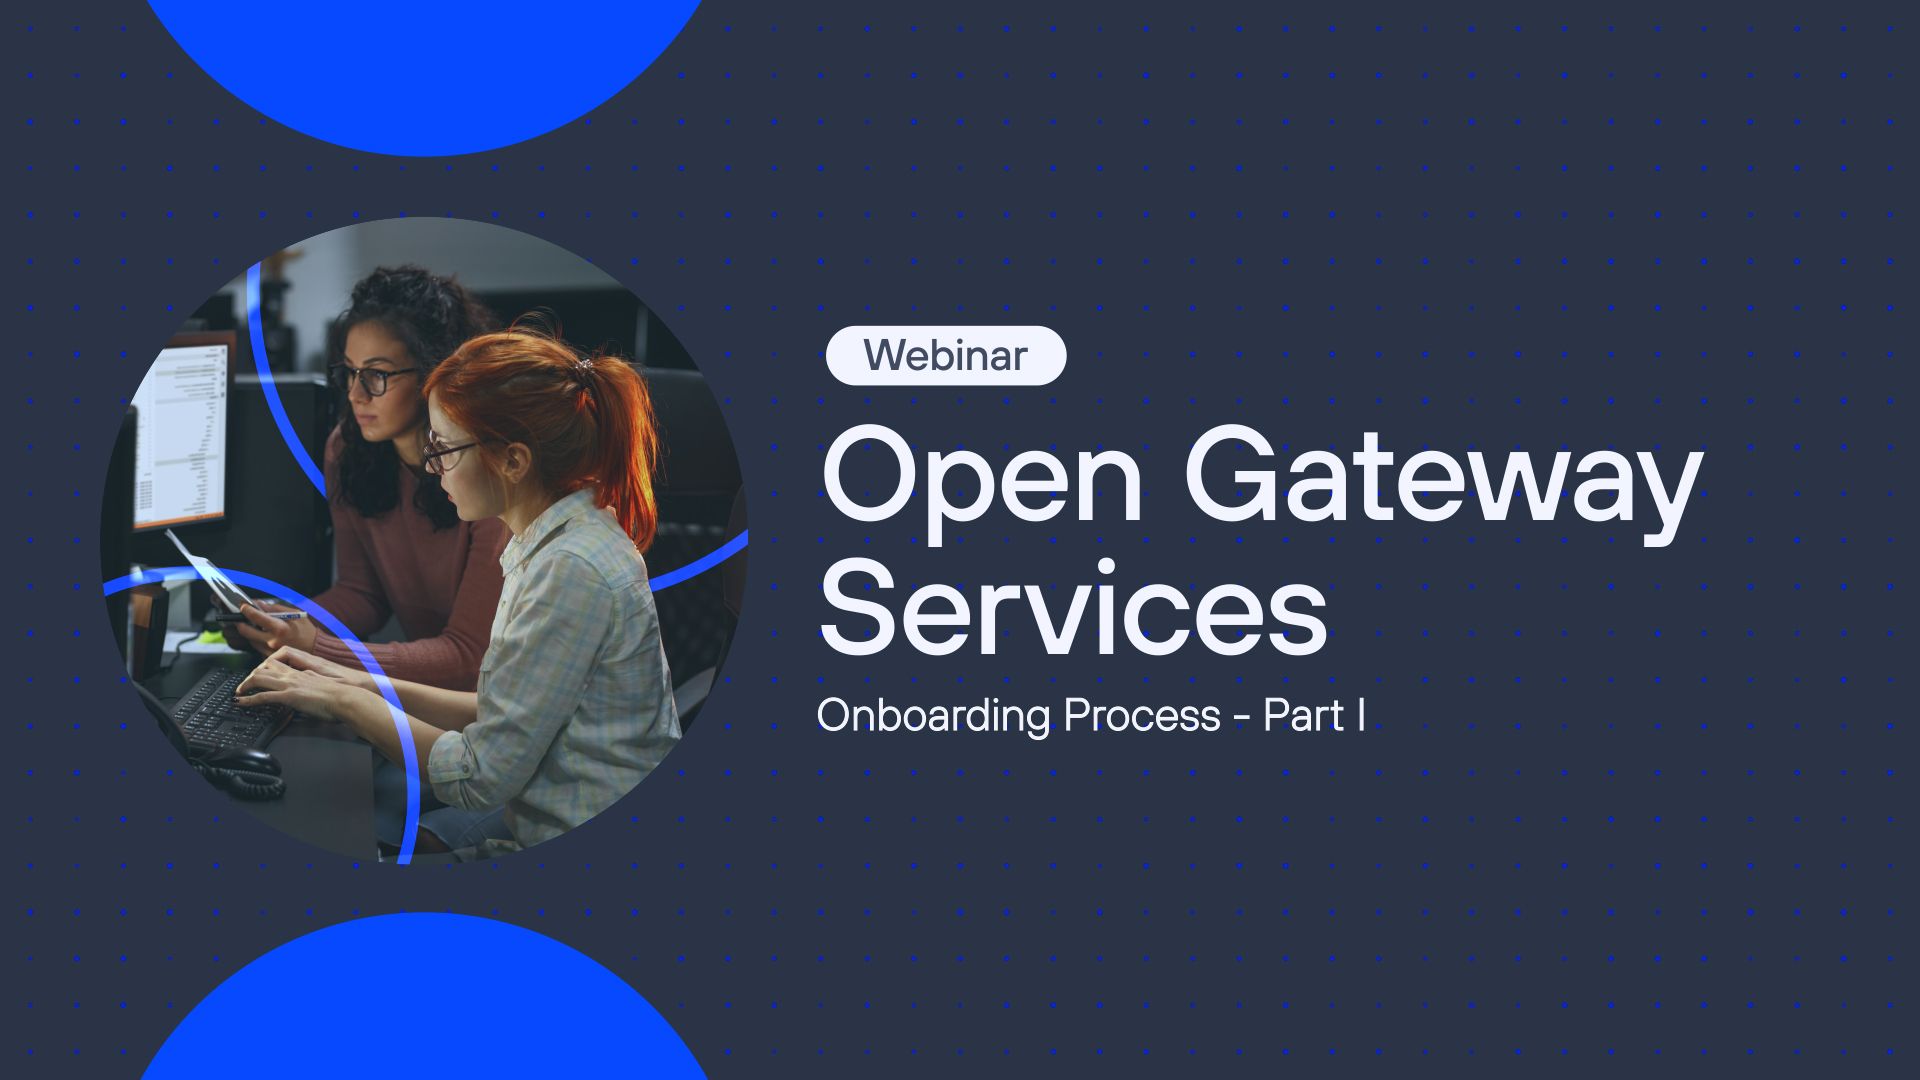 Open Gateway services onboarding proccess. Part 1.